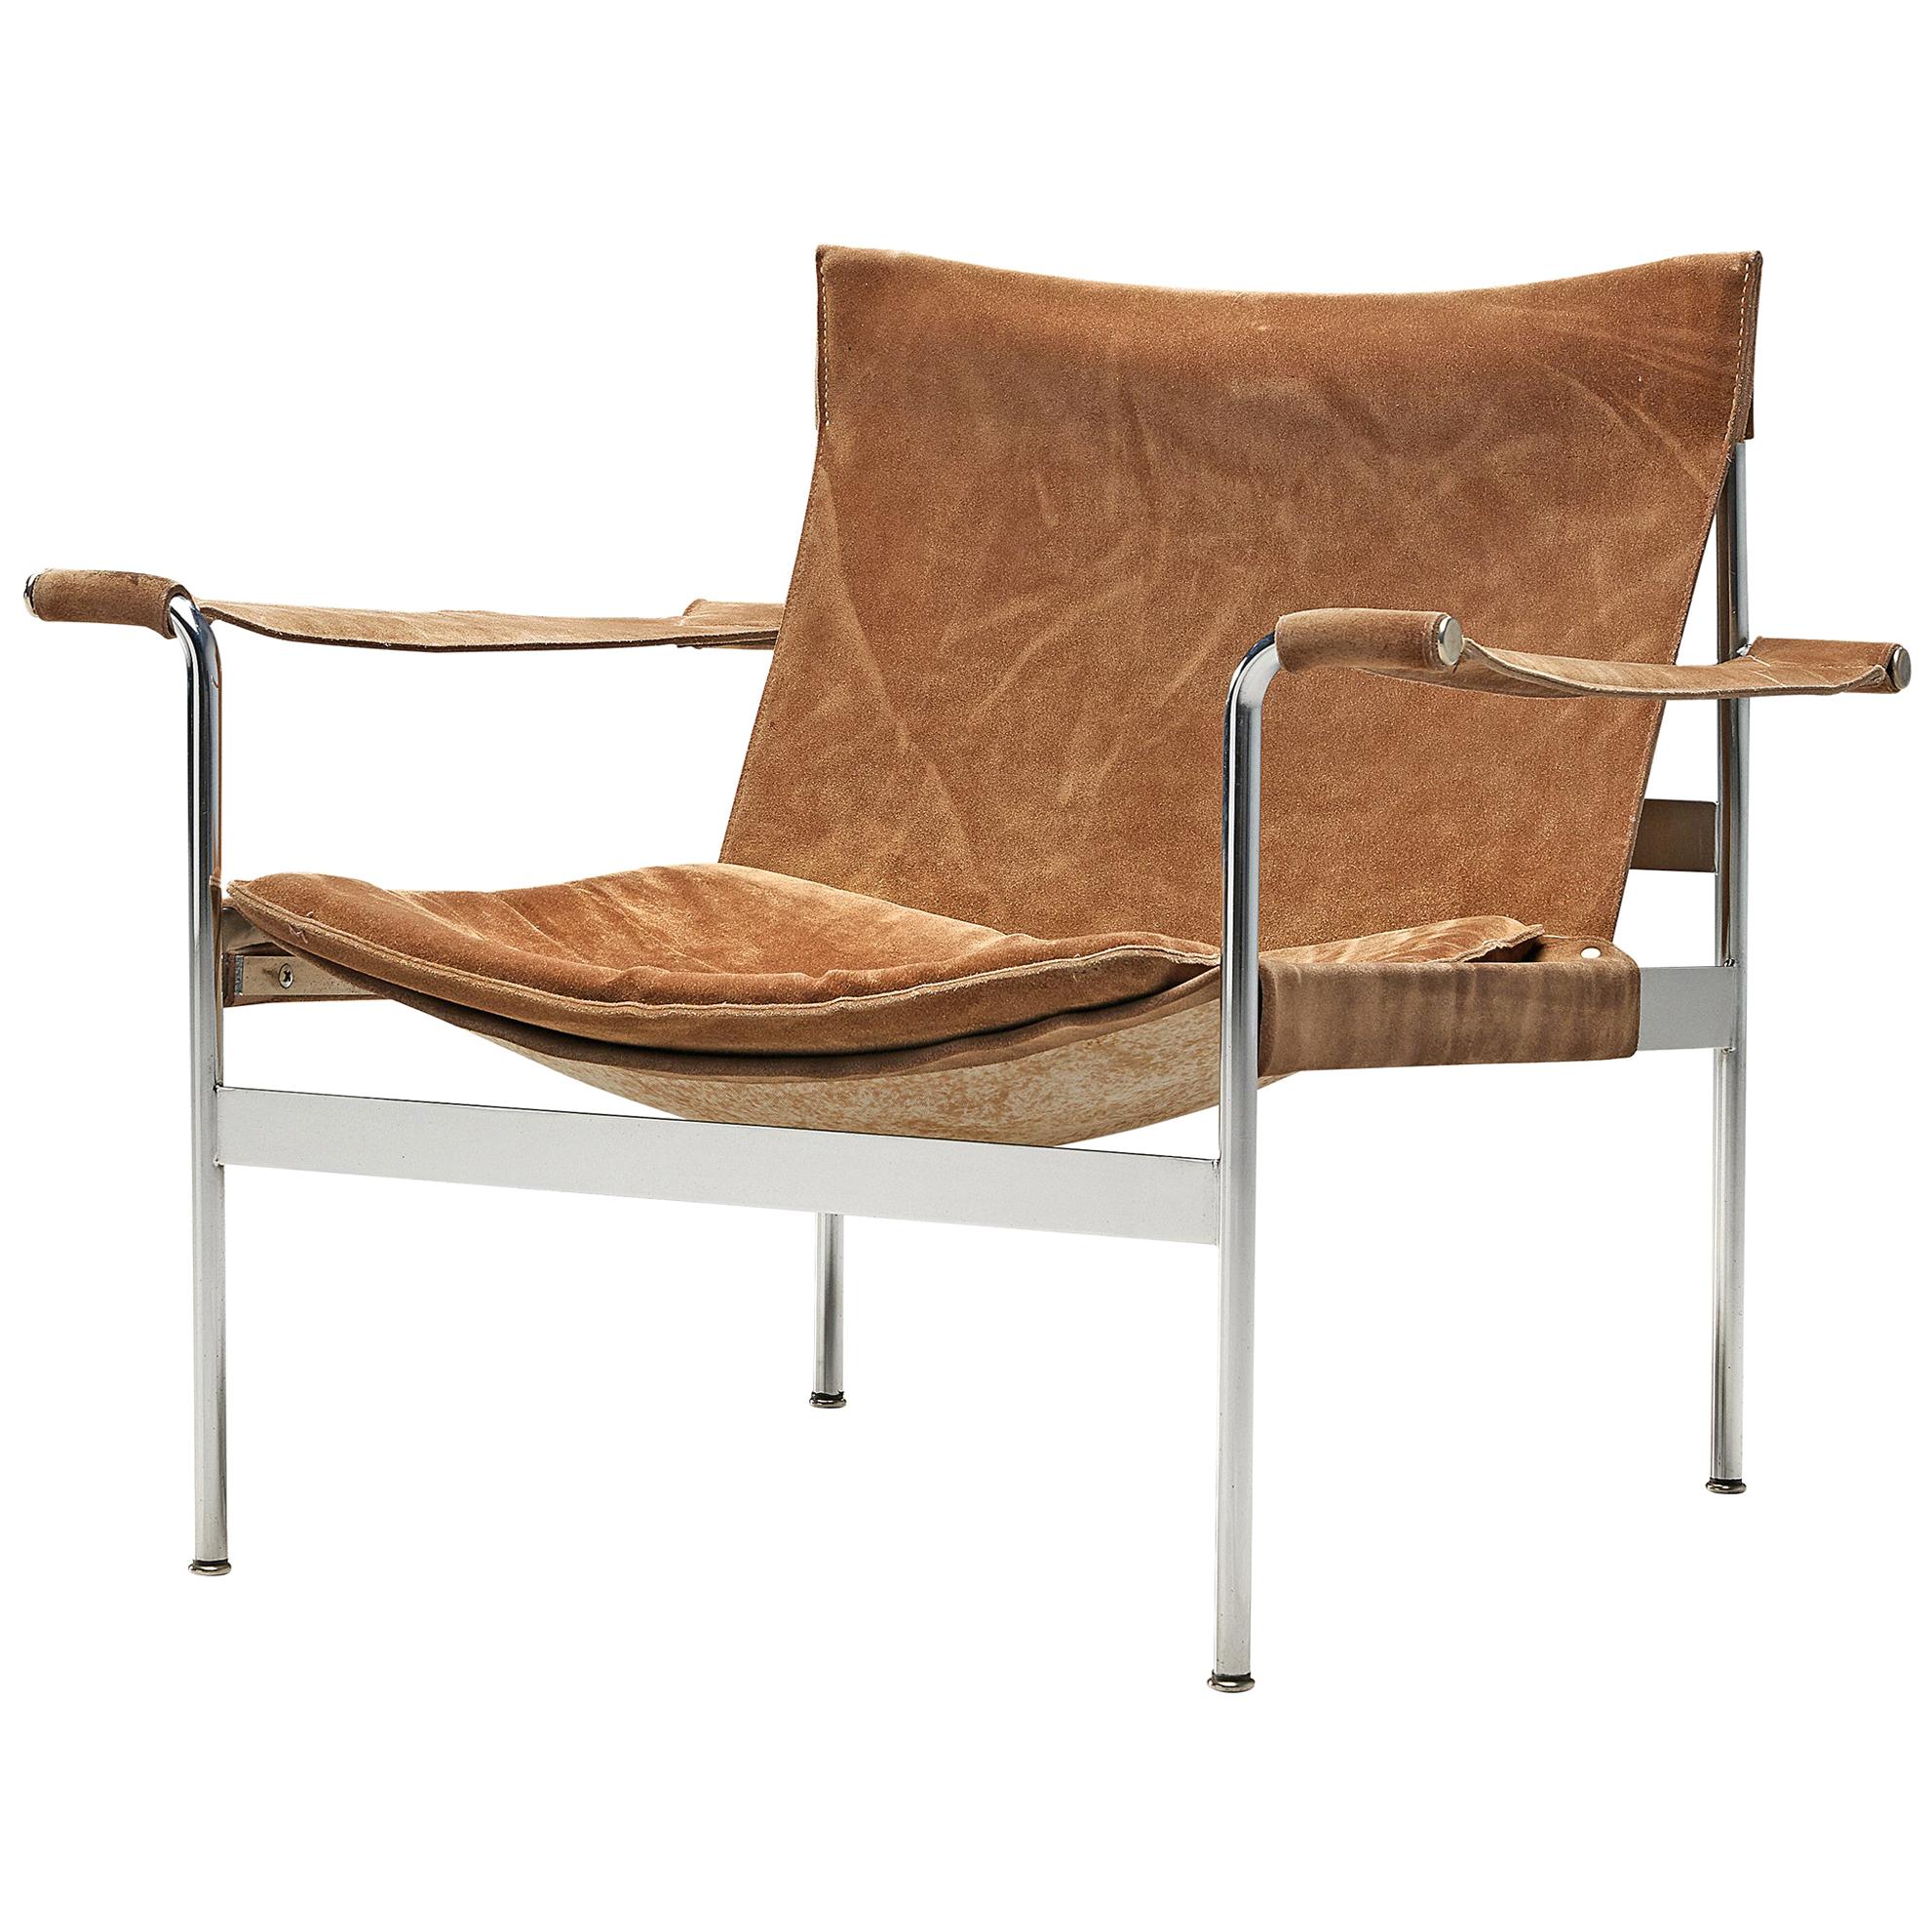 Hans Könecke "Sling" Lounge Chair 